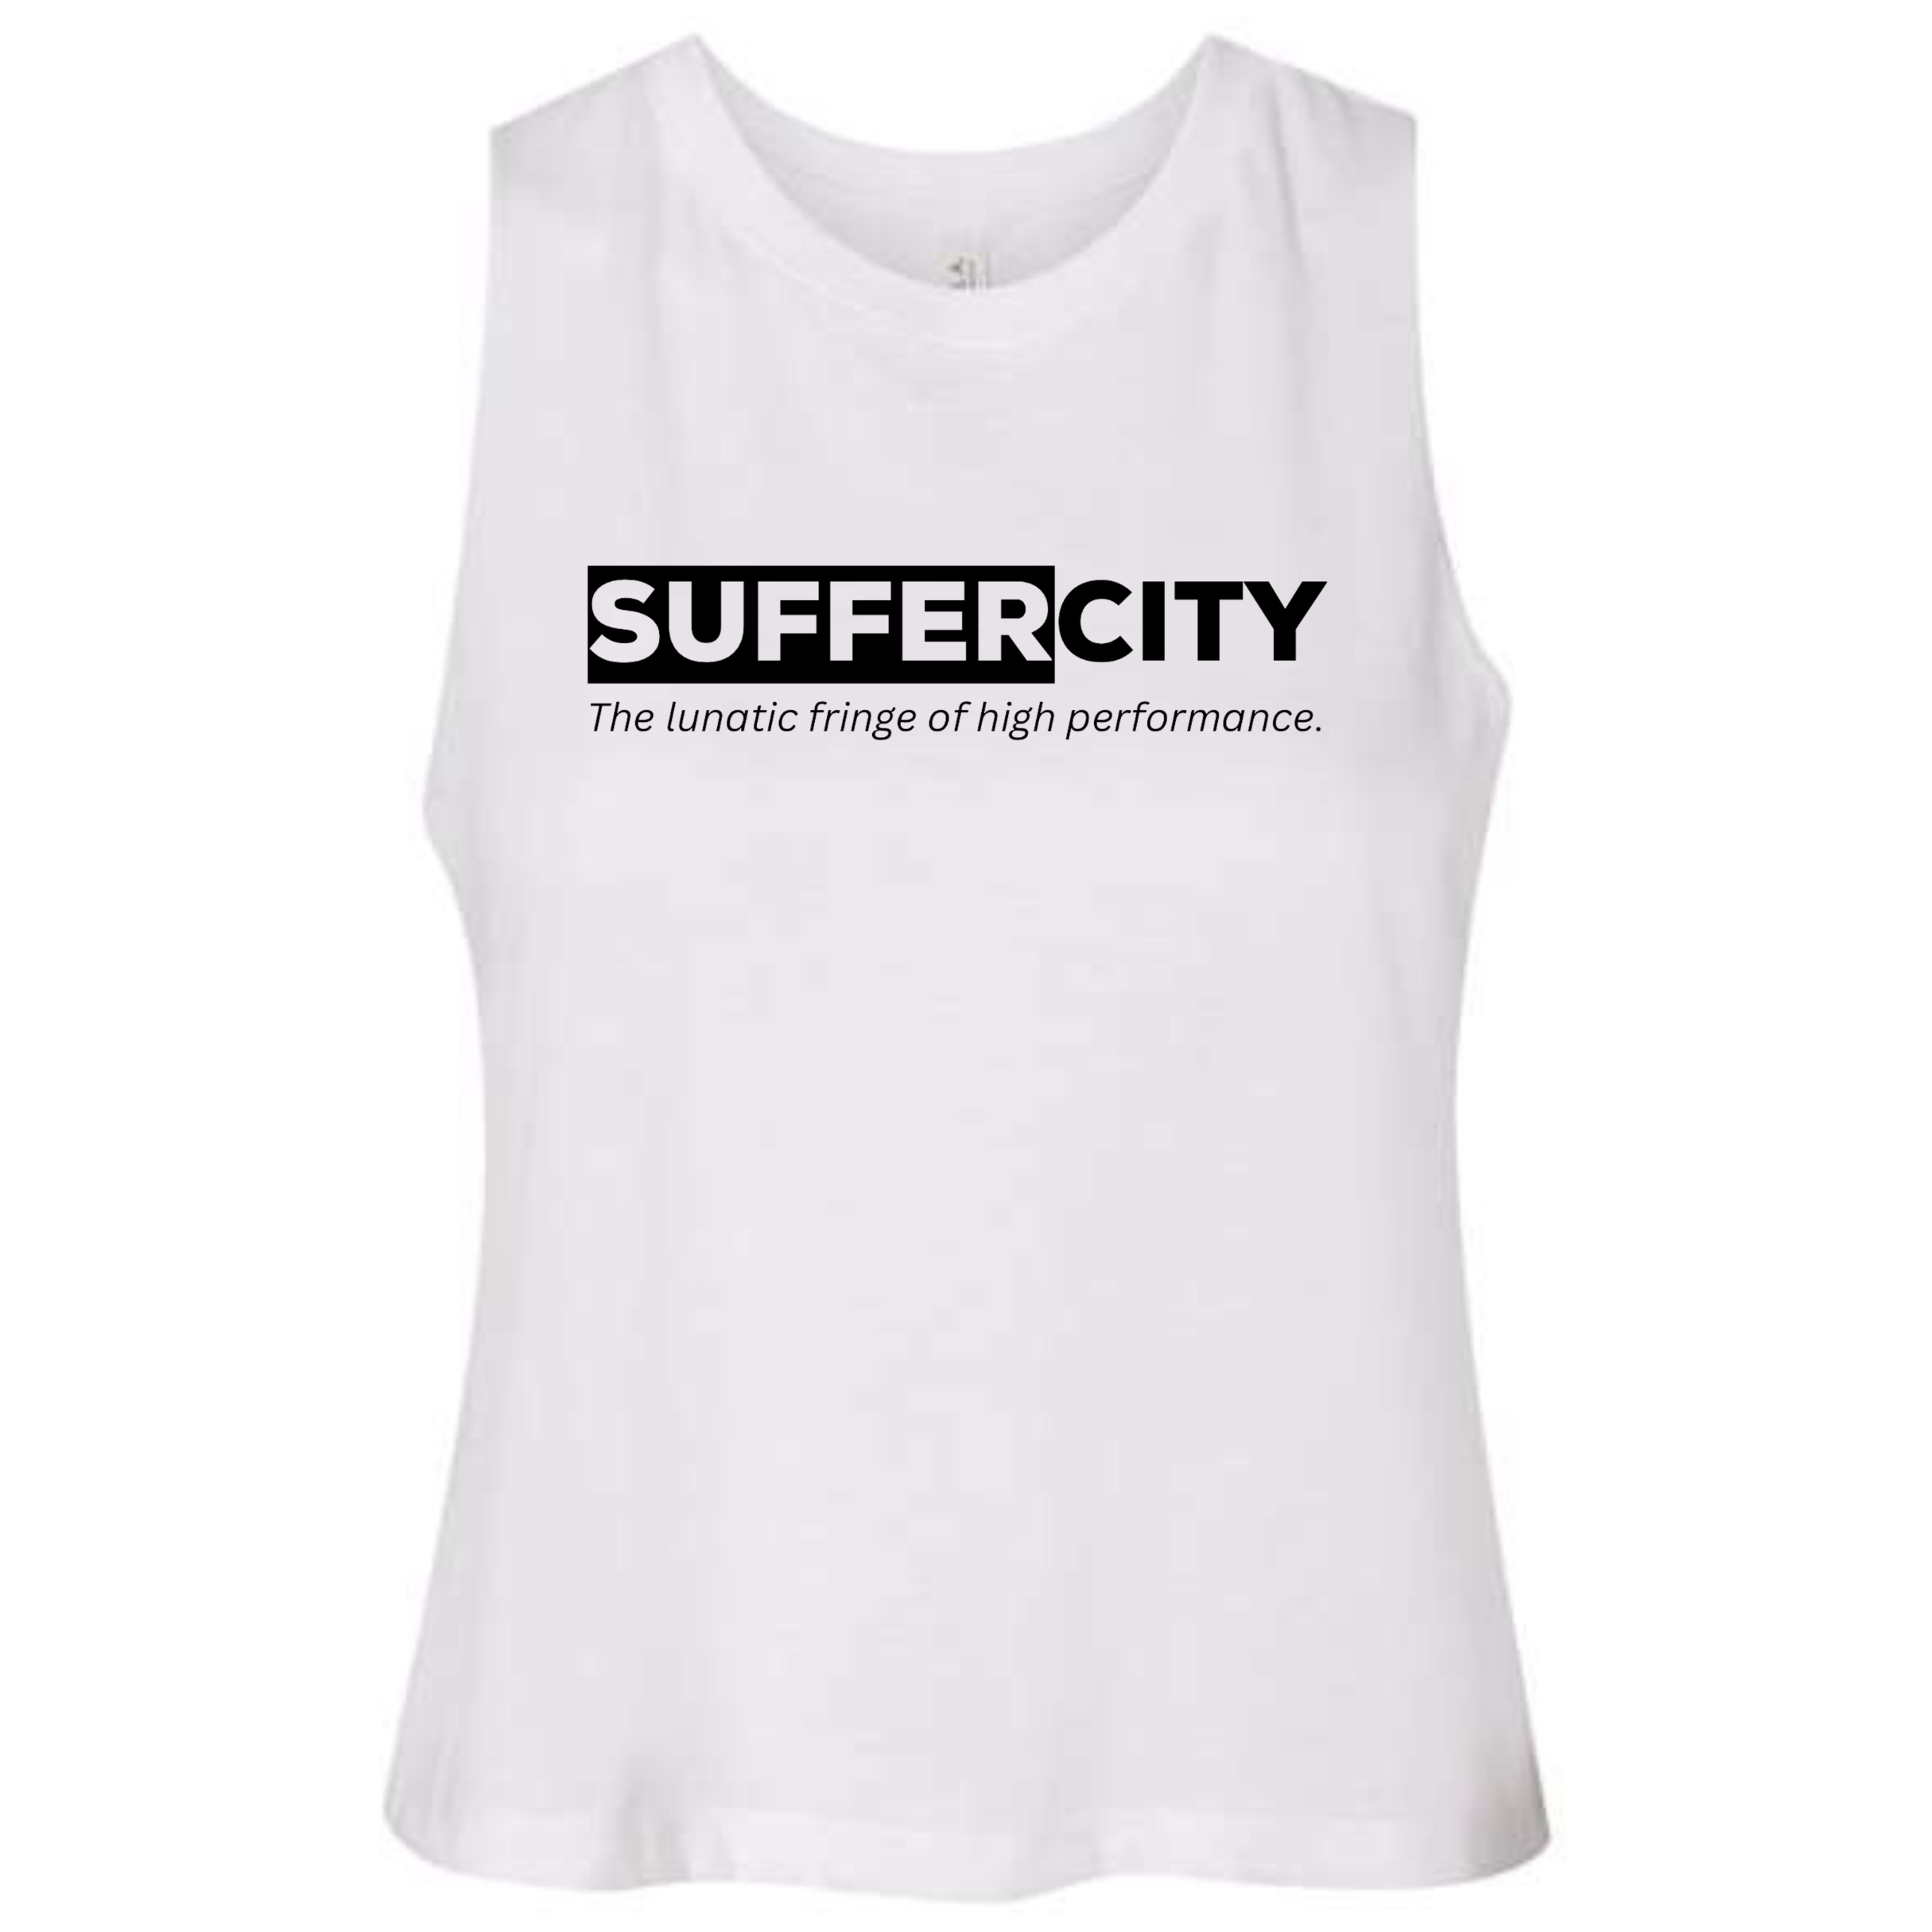 Suffer City OG “Cooler" Options